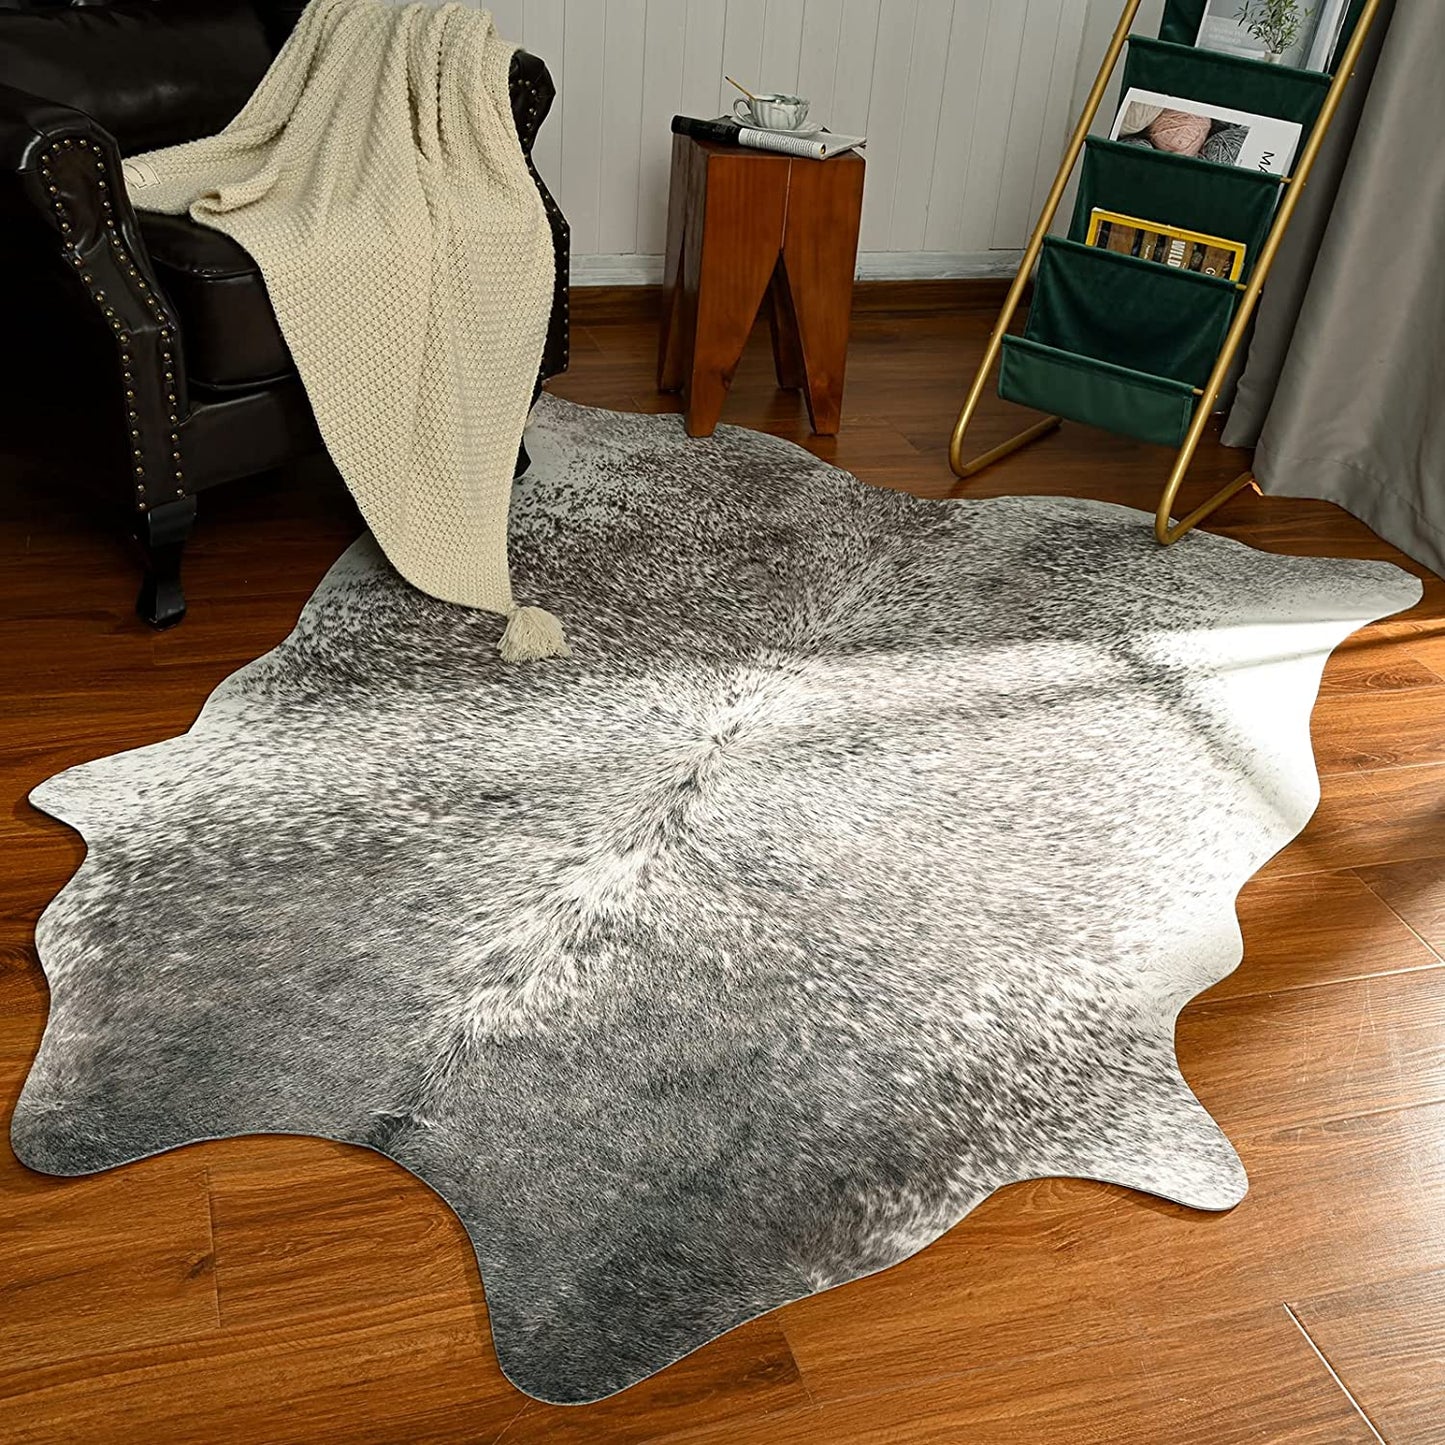 Cowhide Carpet Cow Print Rug American Style for Bedroom Living Room